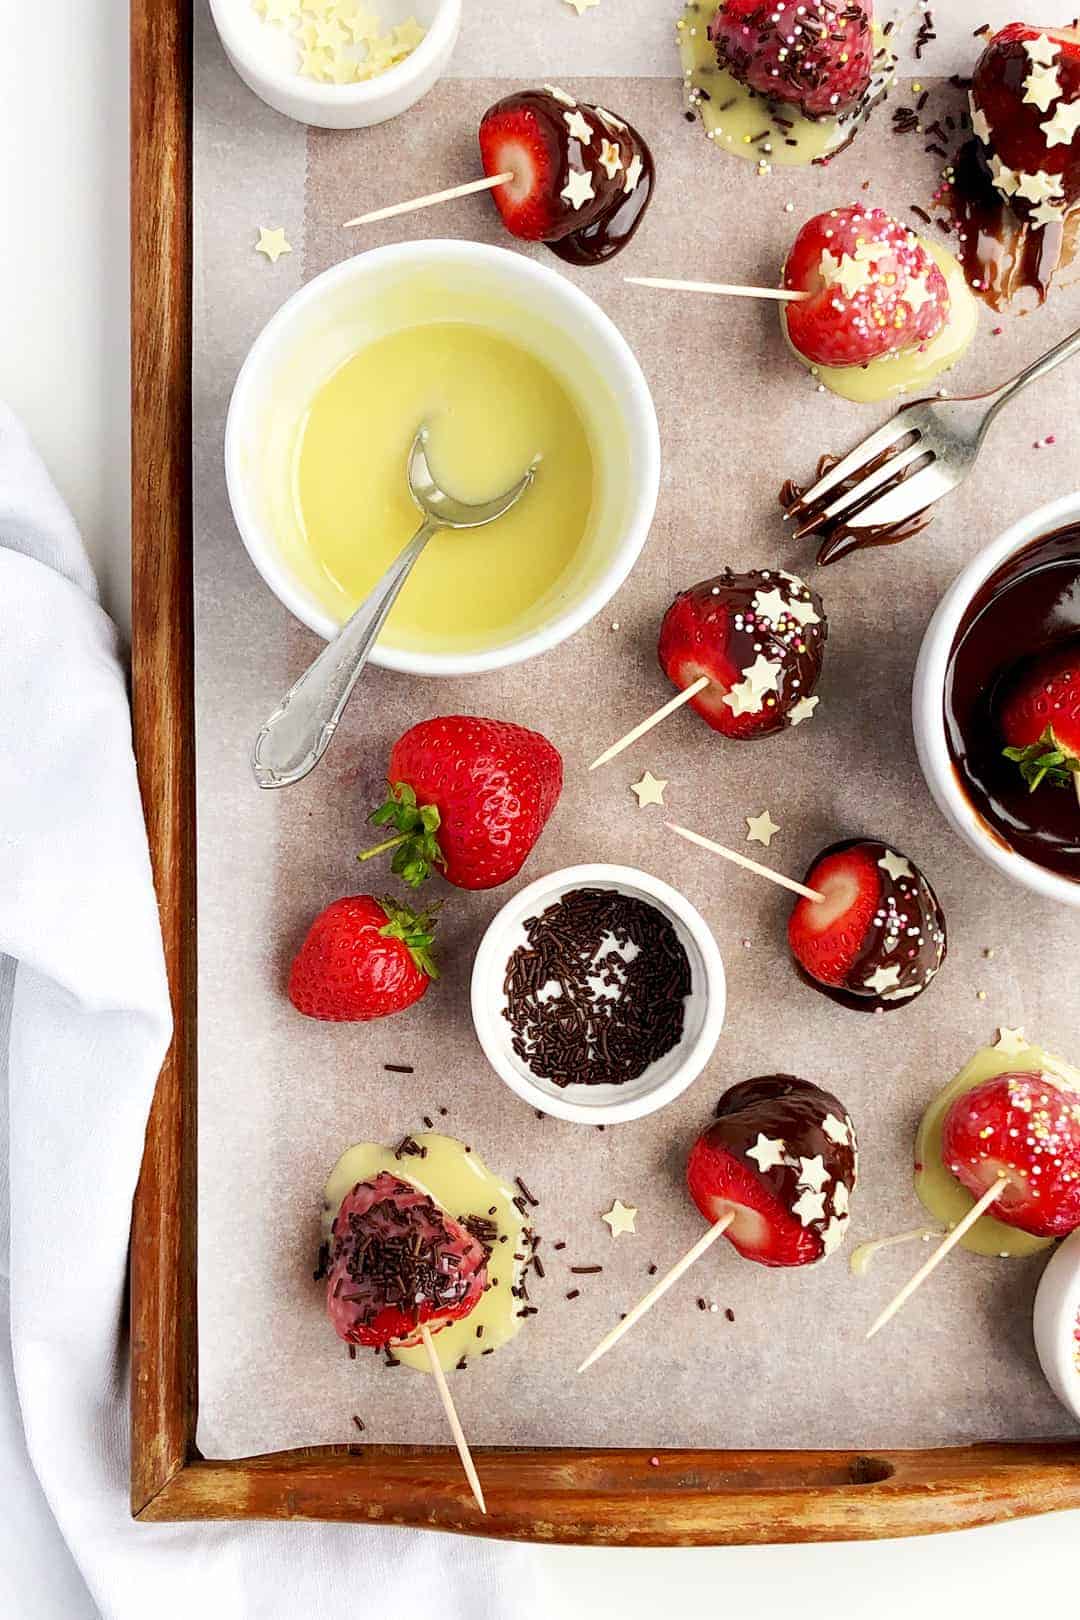 Summer dessert - fresh strawberries dipped in milk chocolate